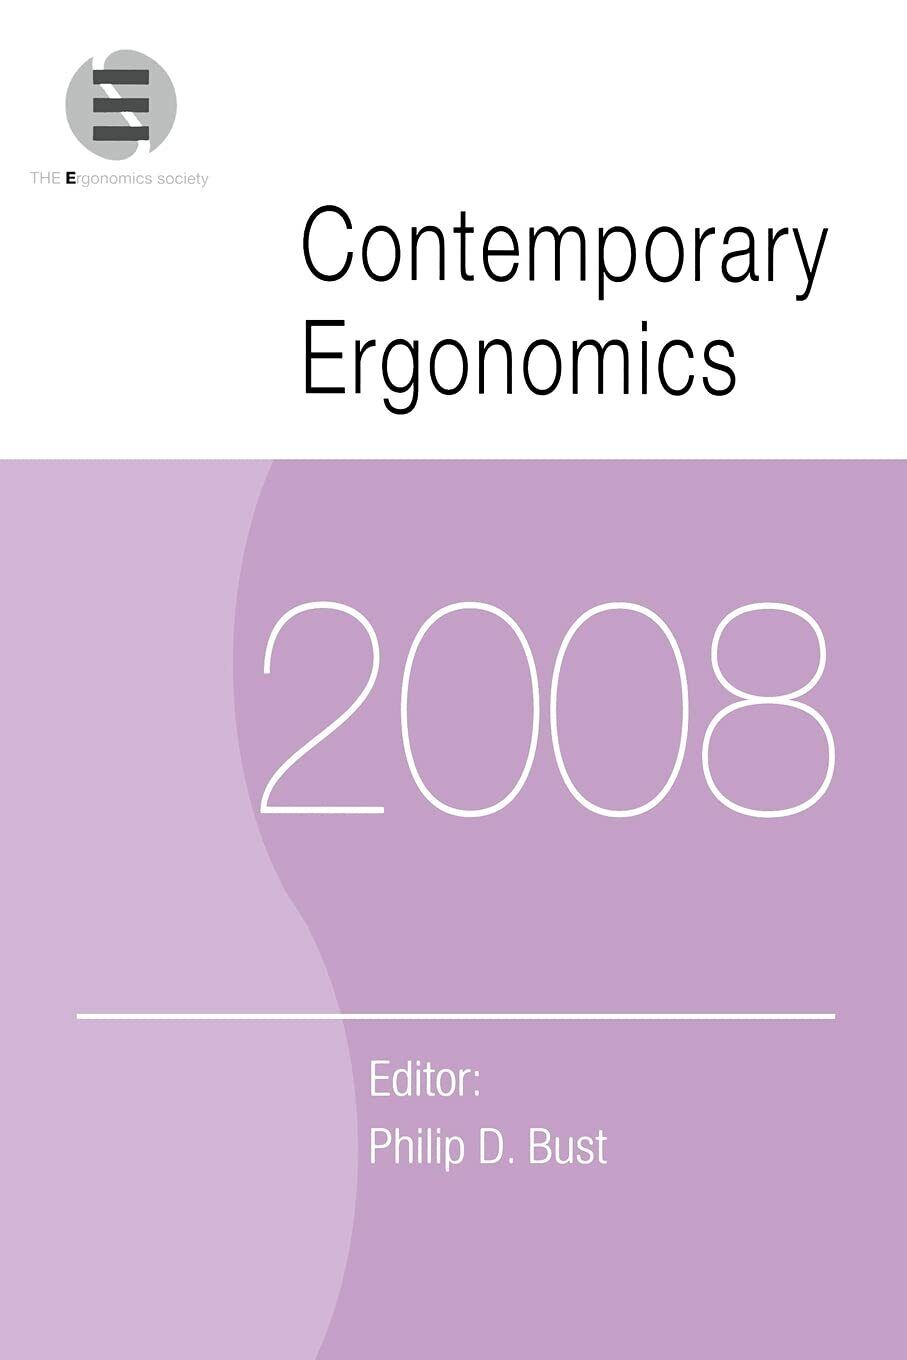 Contemporary Ergonomics 2008 - Philip D. Bust - Taylor & Francis Ltd, 2008